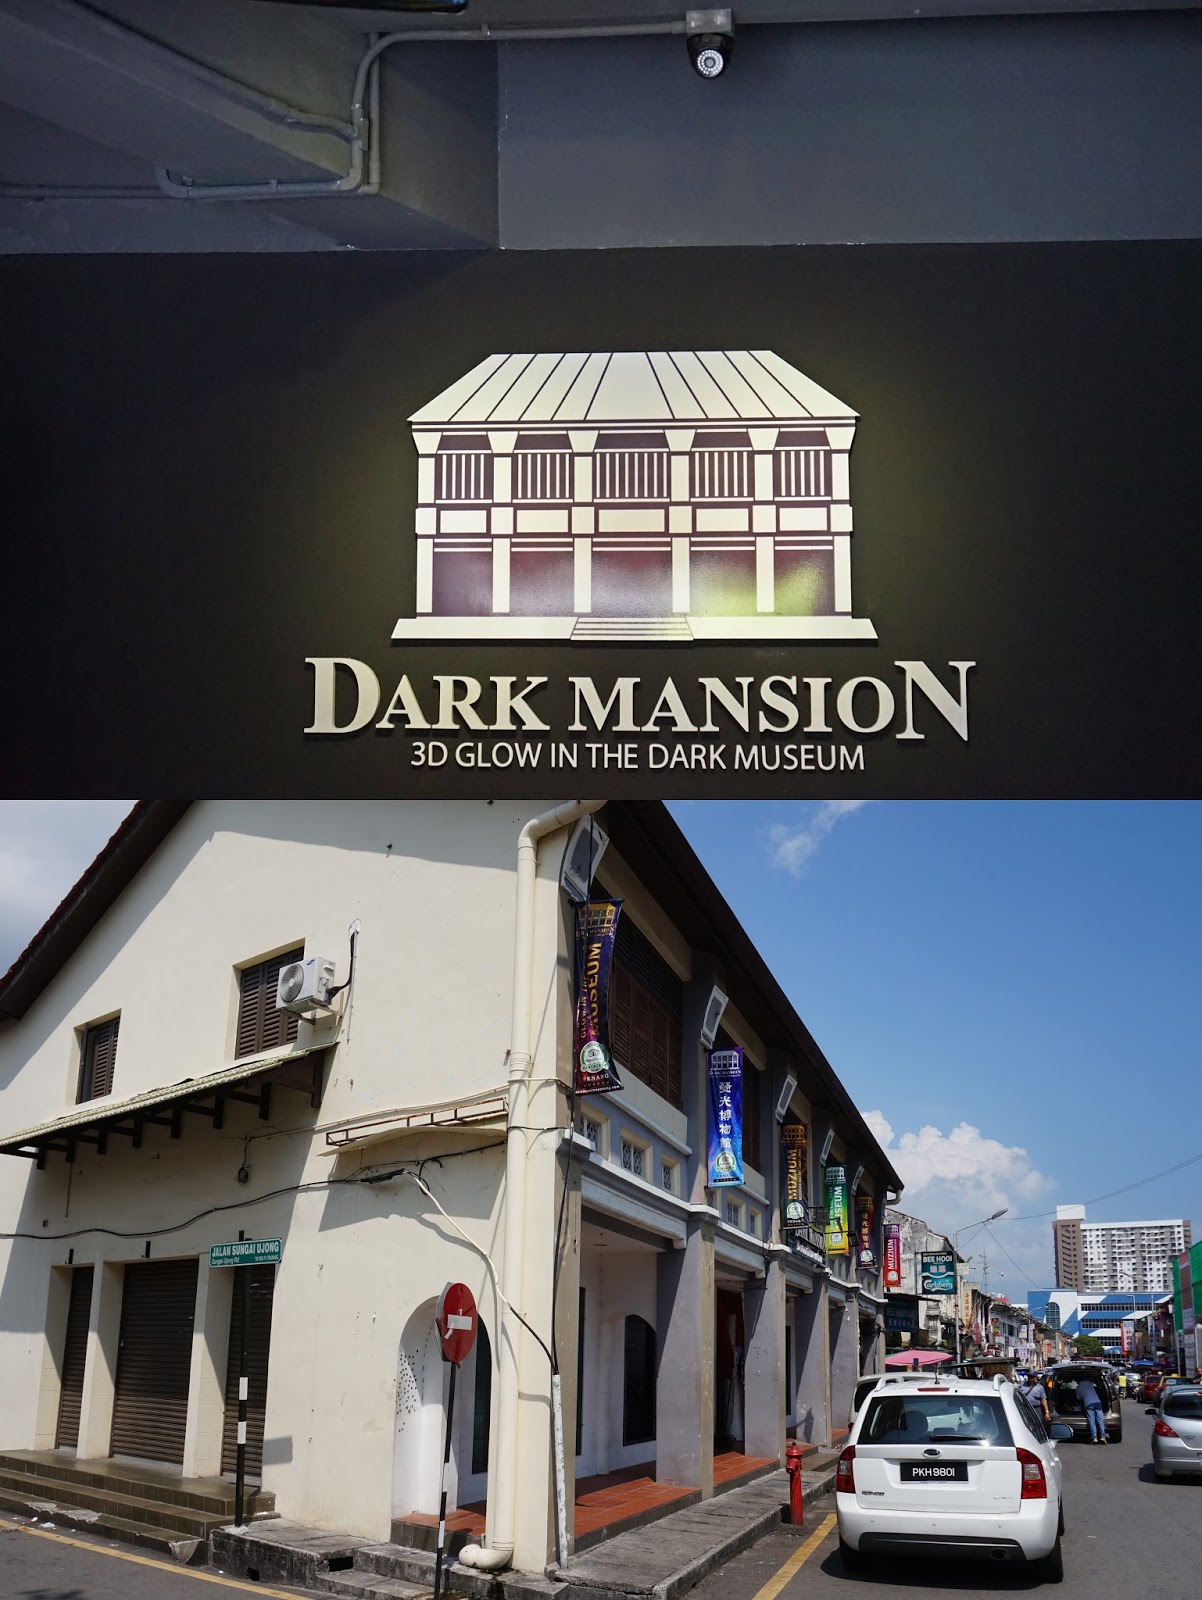 The dark mansion penang